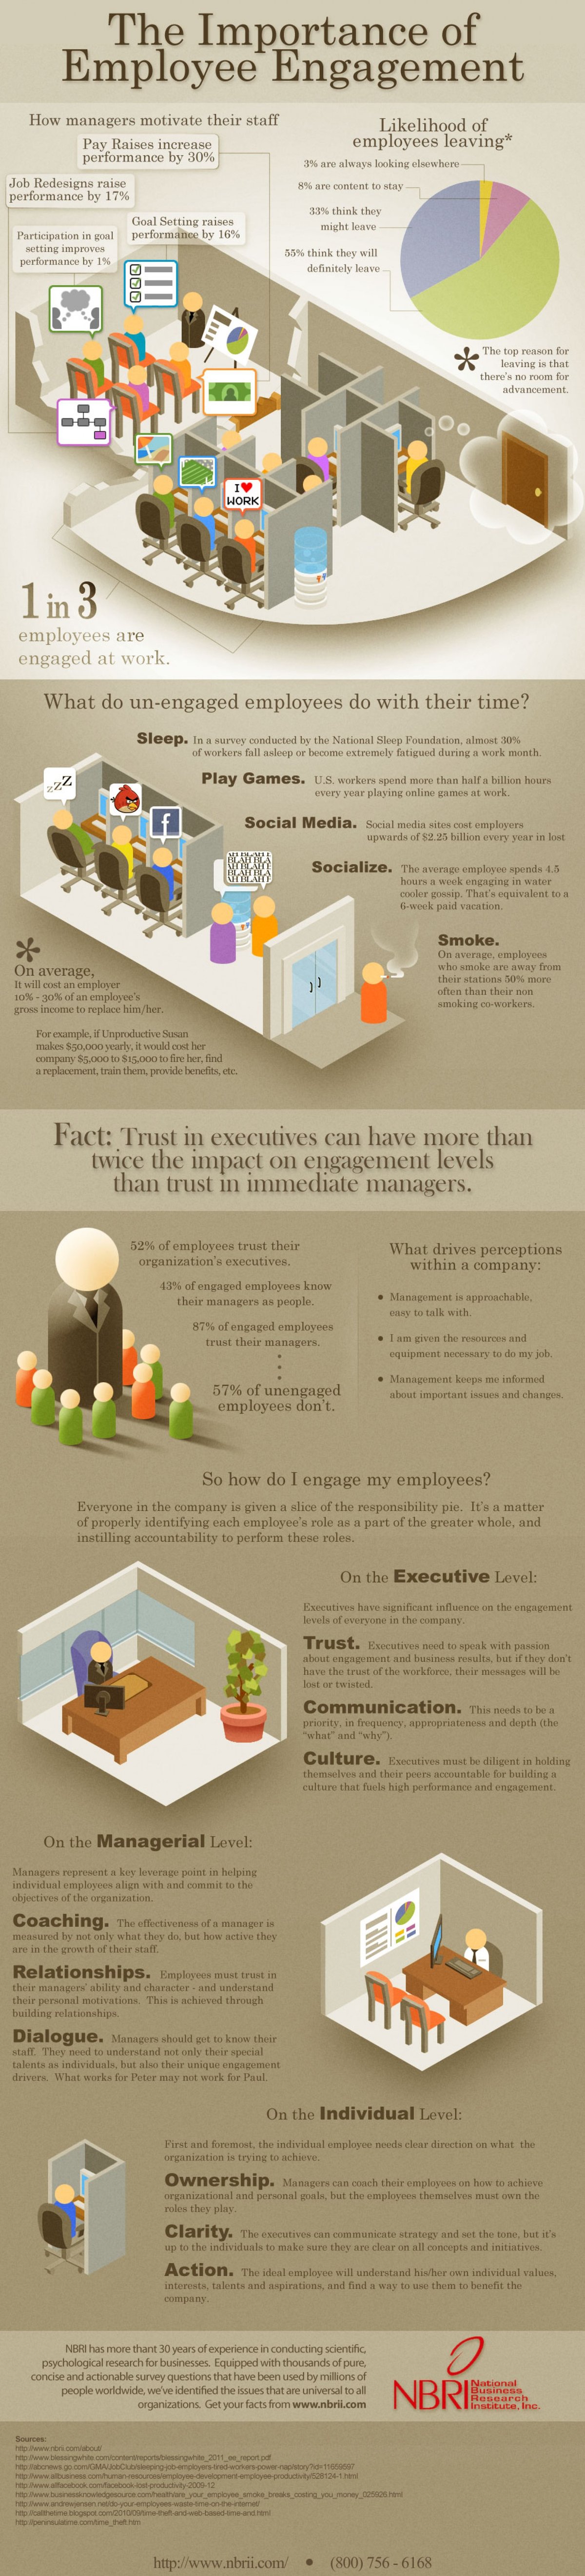 employee engagement infographic